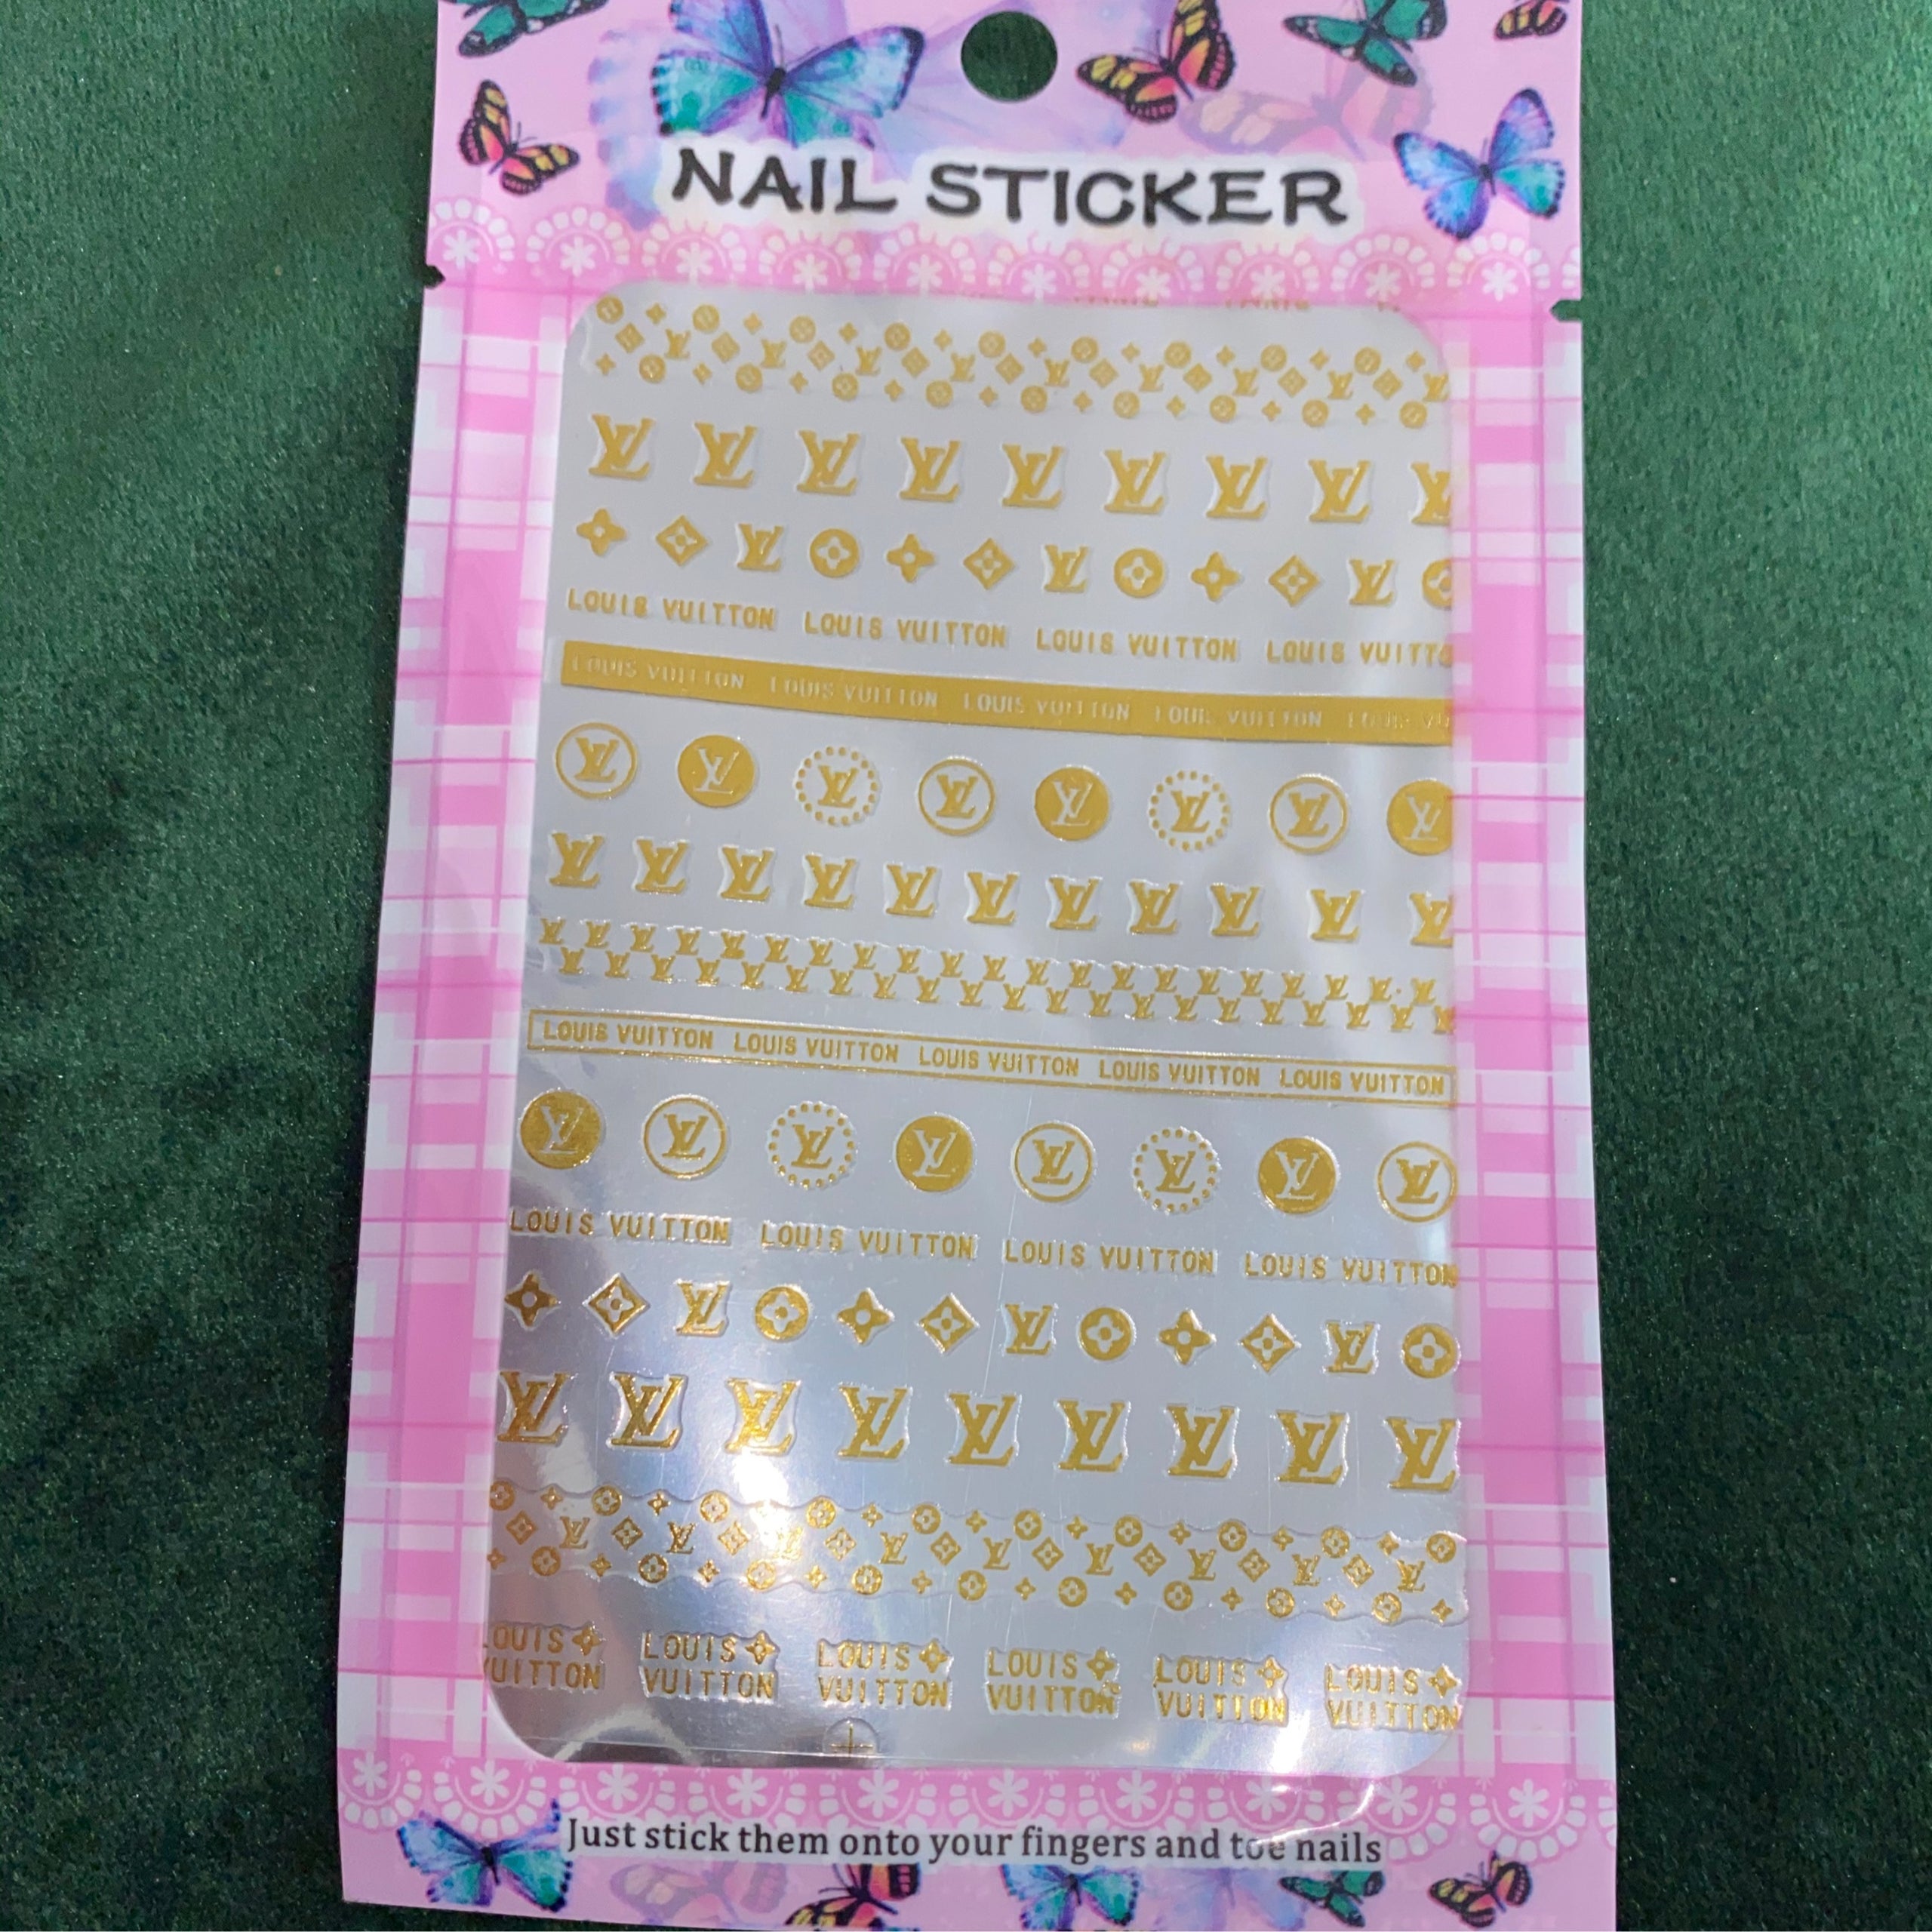 lv nail art stickers